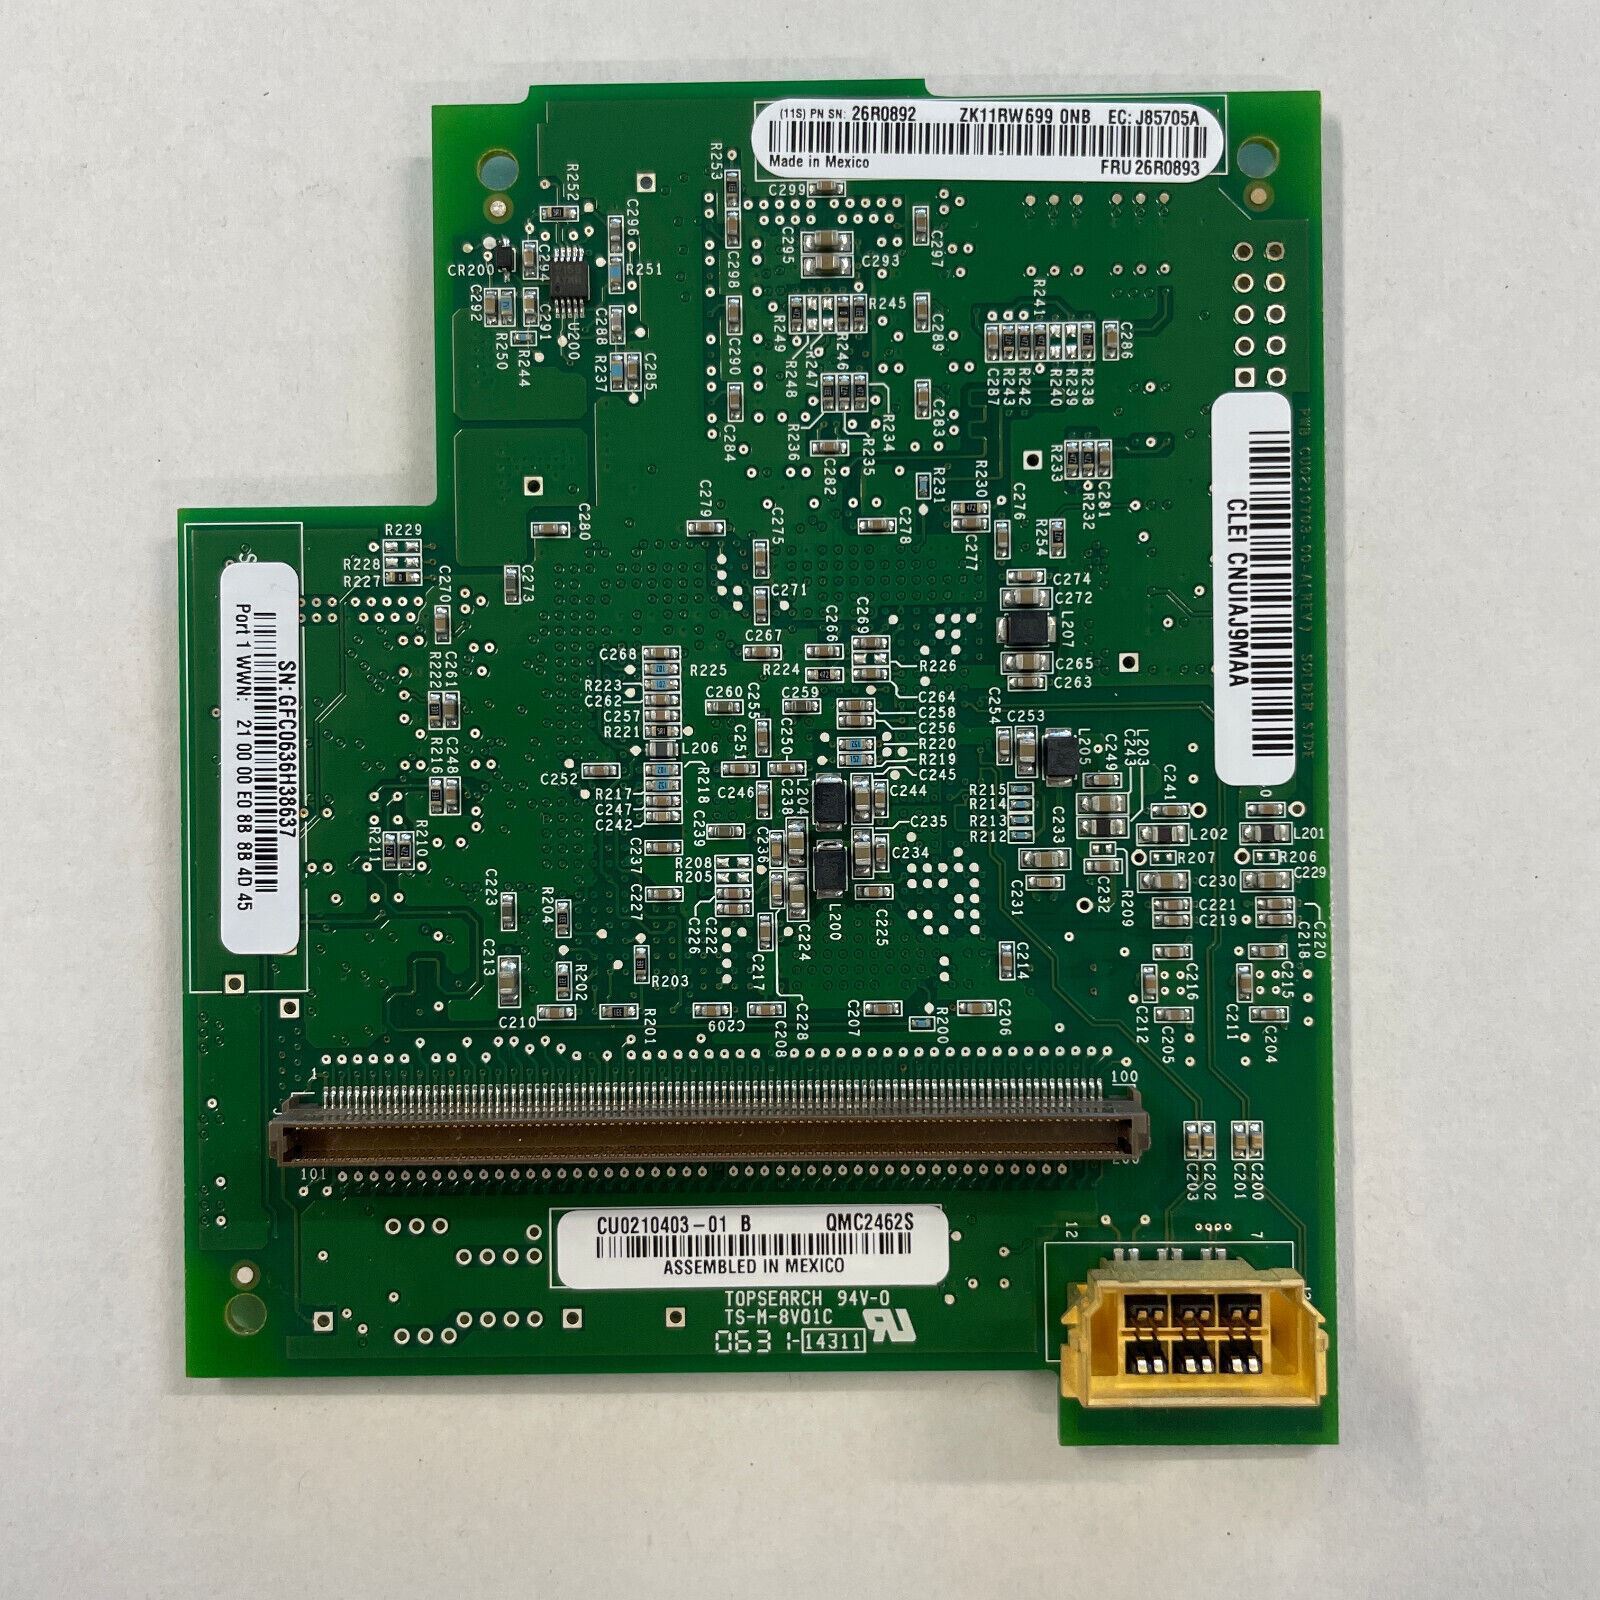 Genuine IBM Qlogic 4Gb SFF Fibre Channel Expansion Card QMC2462S 26R0893 